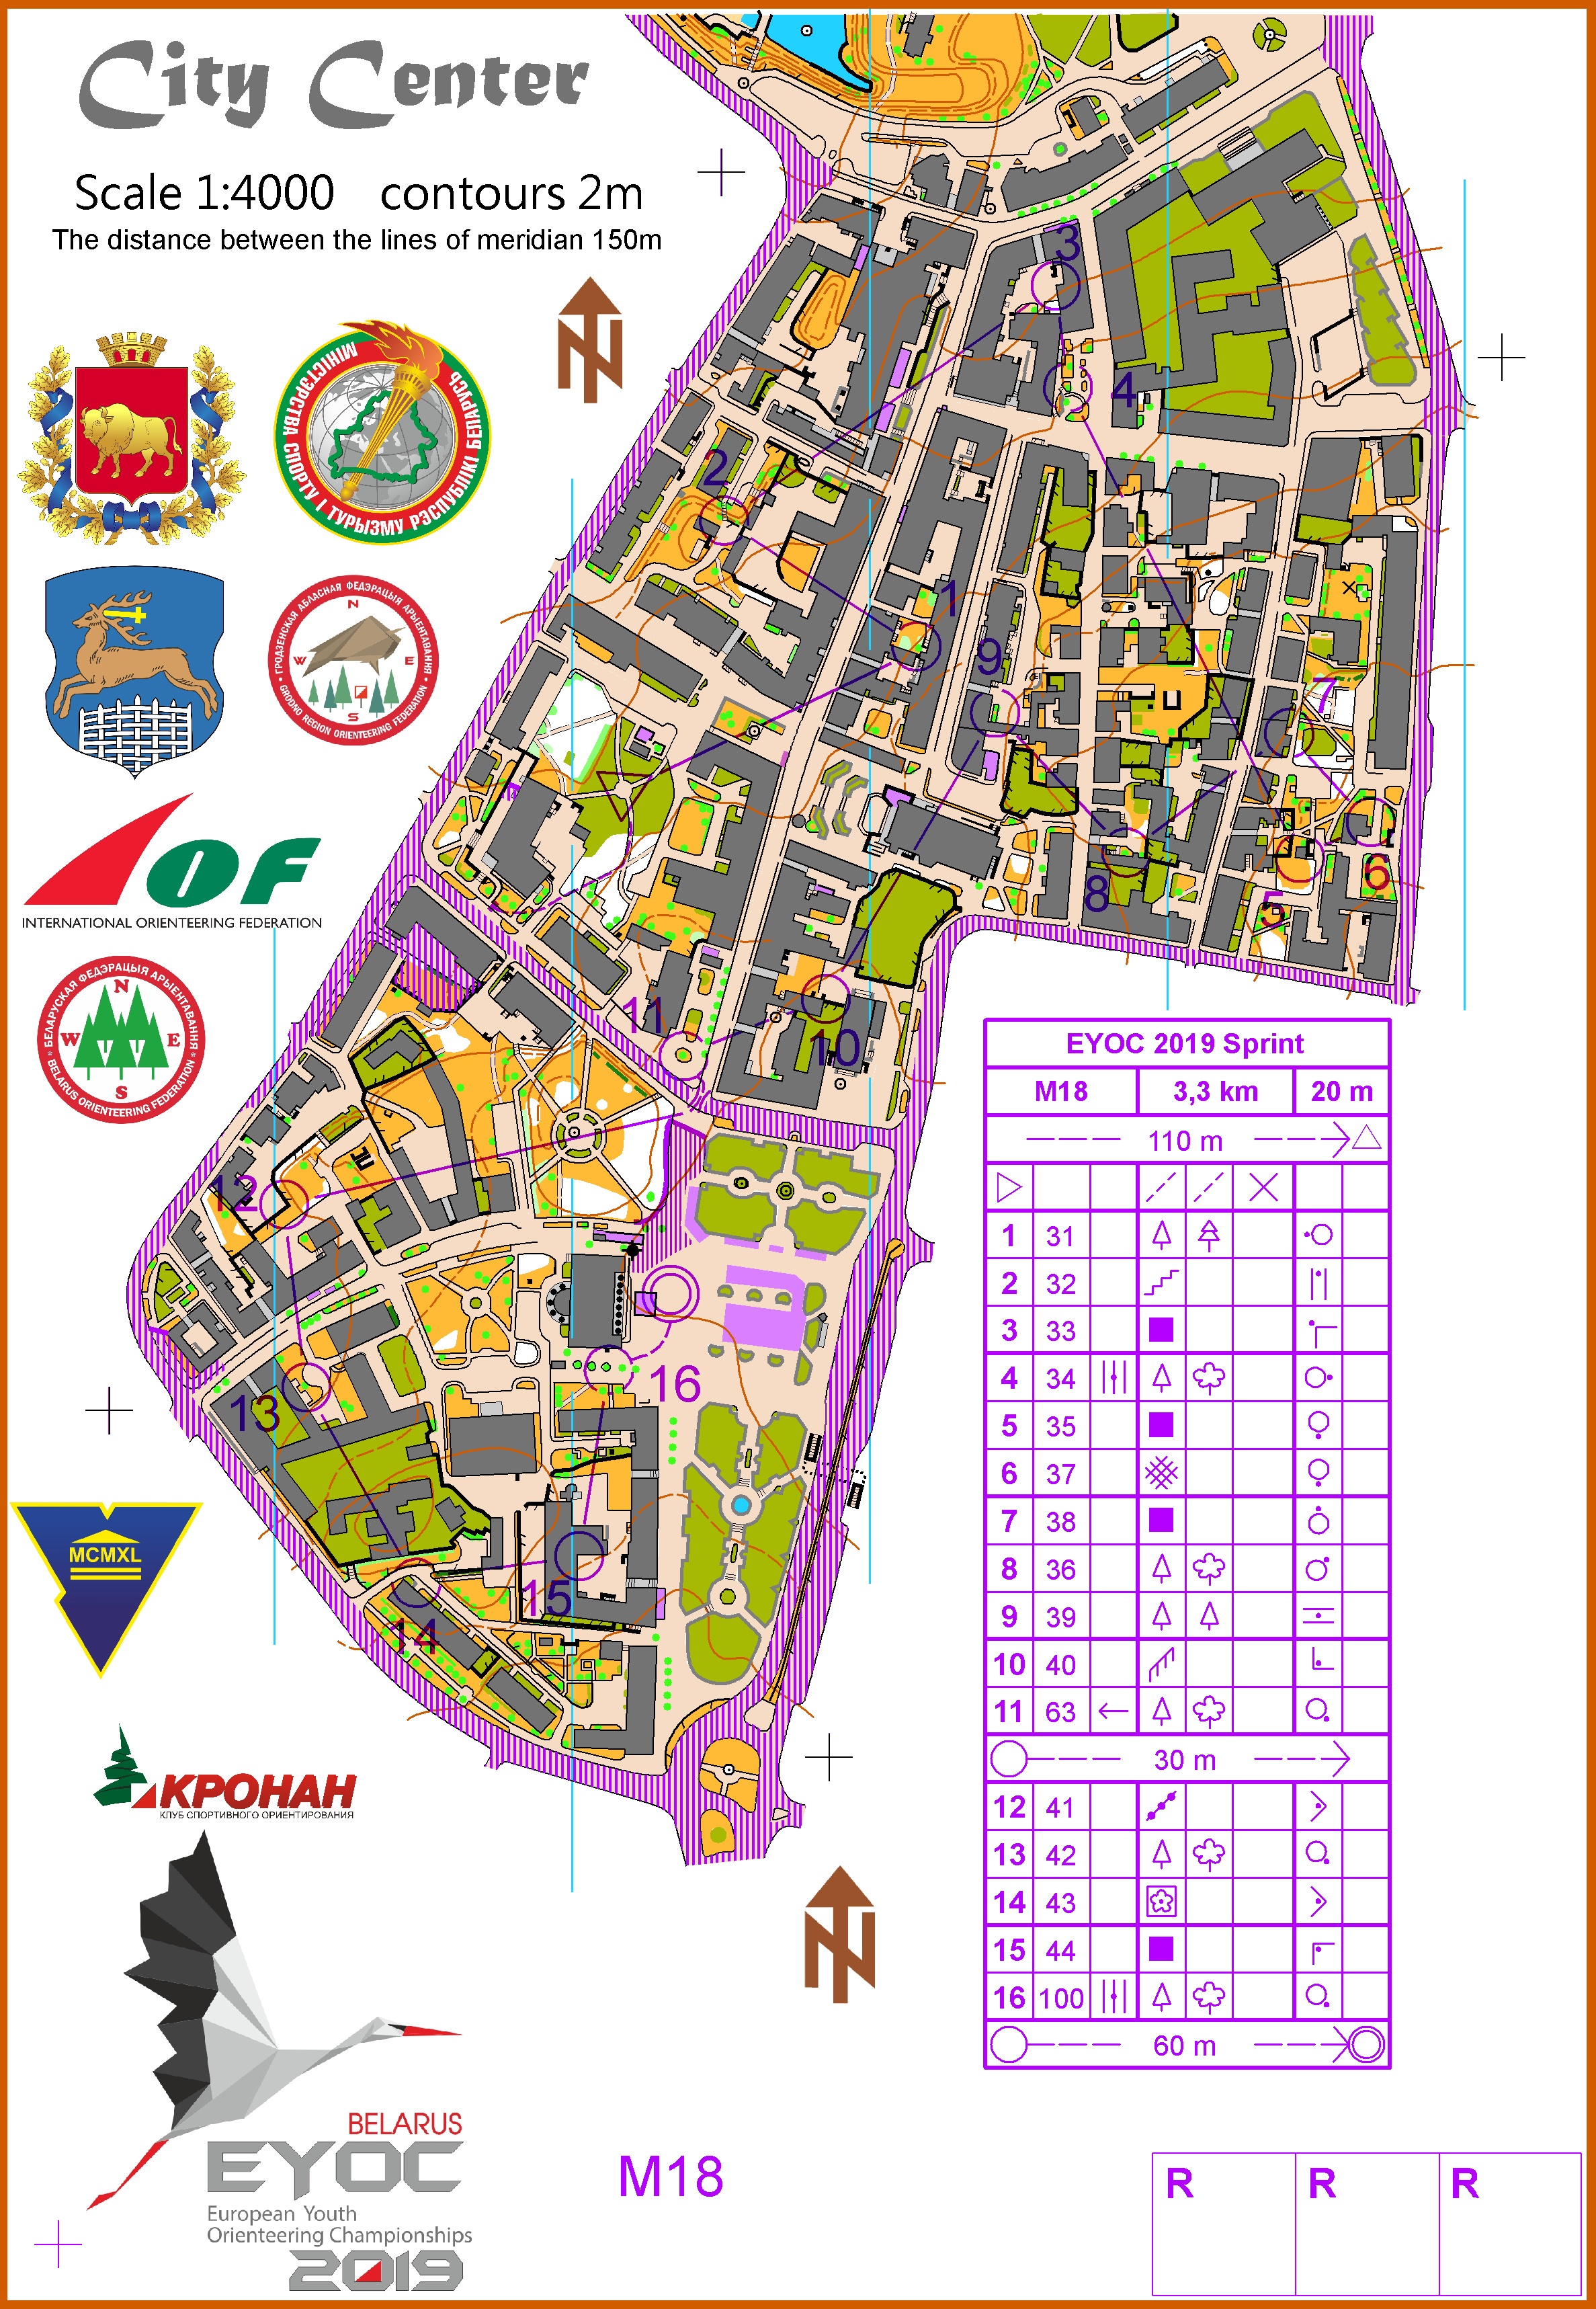 European Youth Orienteering Championships - EYOC - Sprint (2019-06-30)